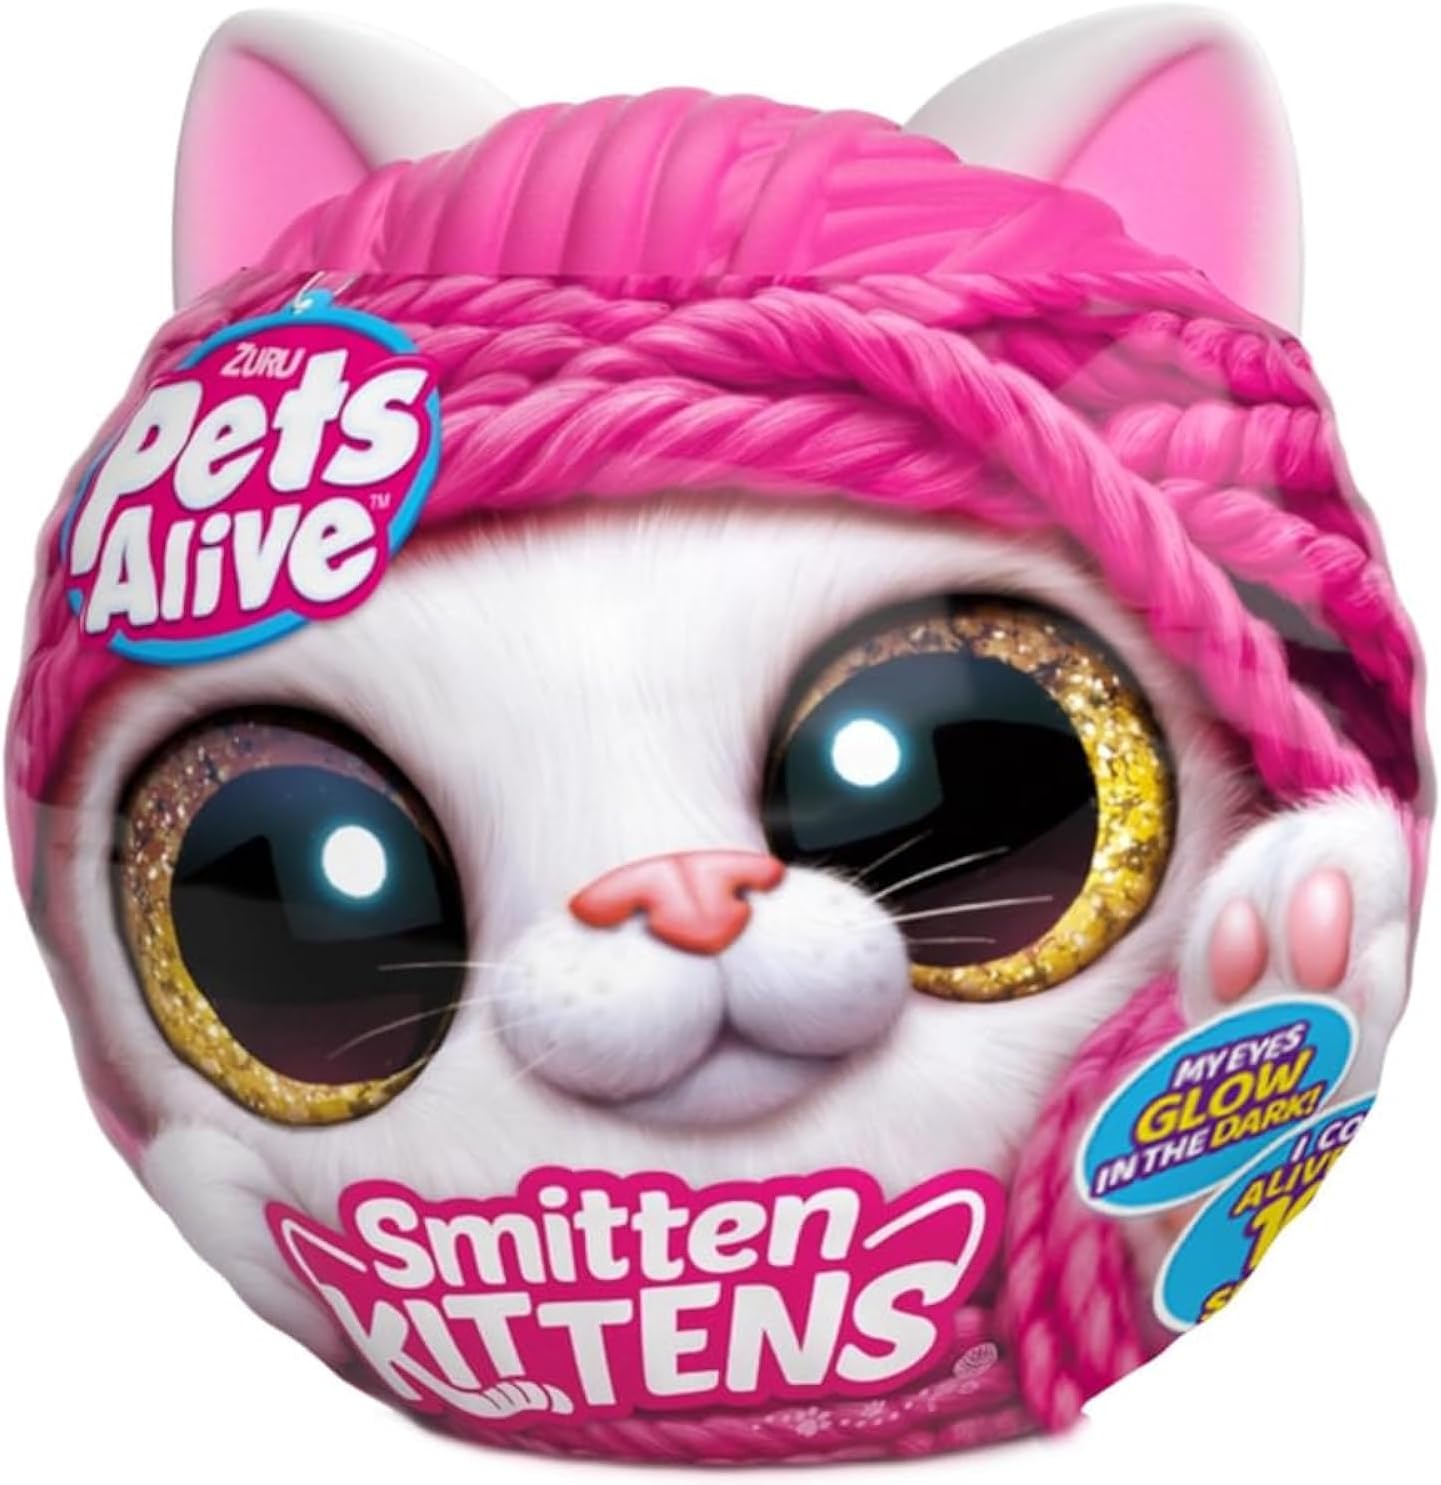 ZURU Pet's Smitten Kitten's Interactive Plush Assorted, Small Brand: ZURU